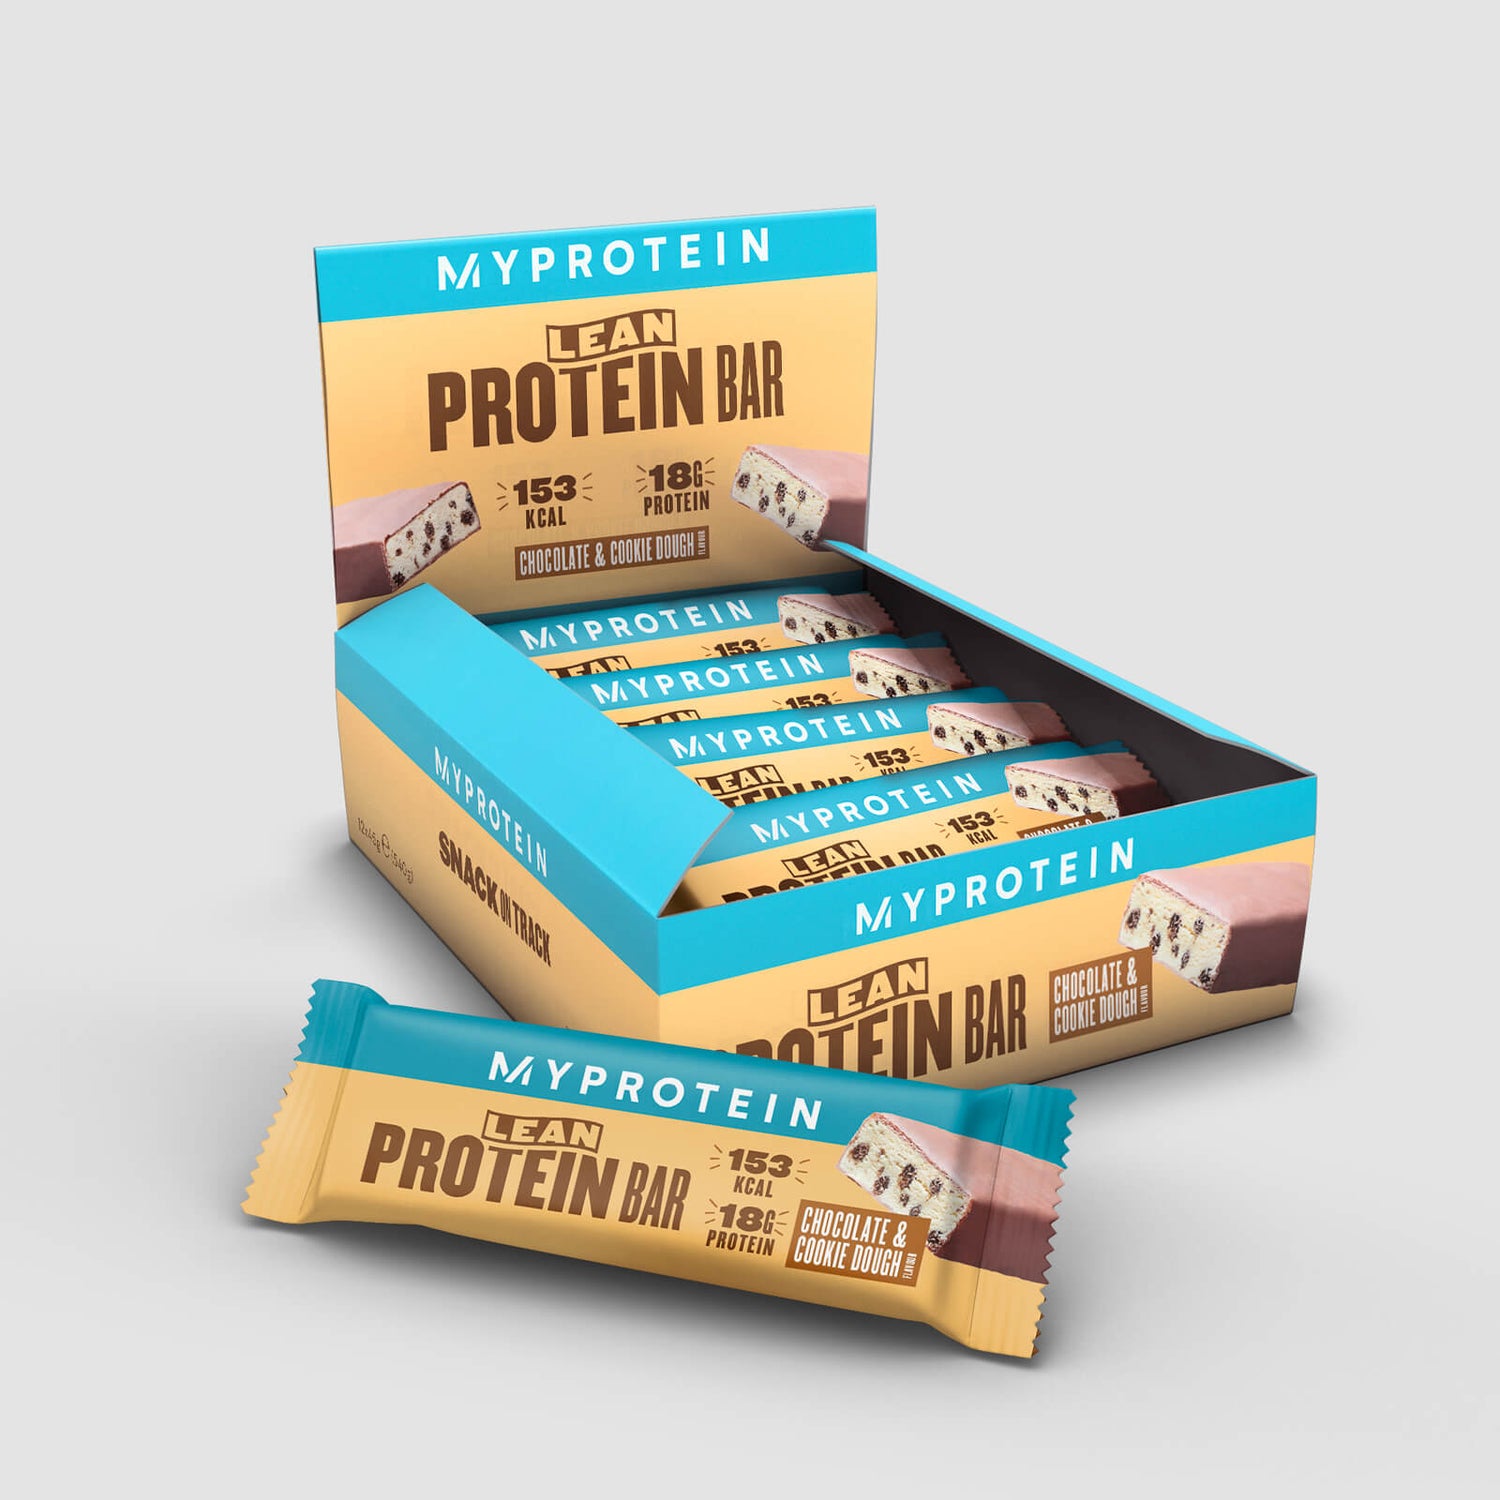 Liesas baltyminis batonėlis „Lean Protein Bar“ - 12 x 45g - Chocolate and Cookie Dough